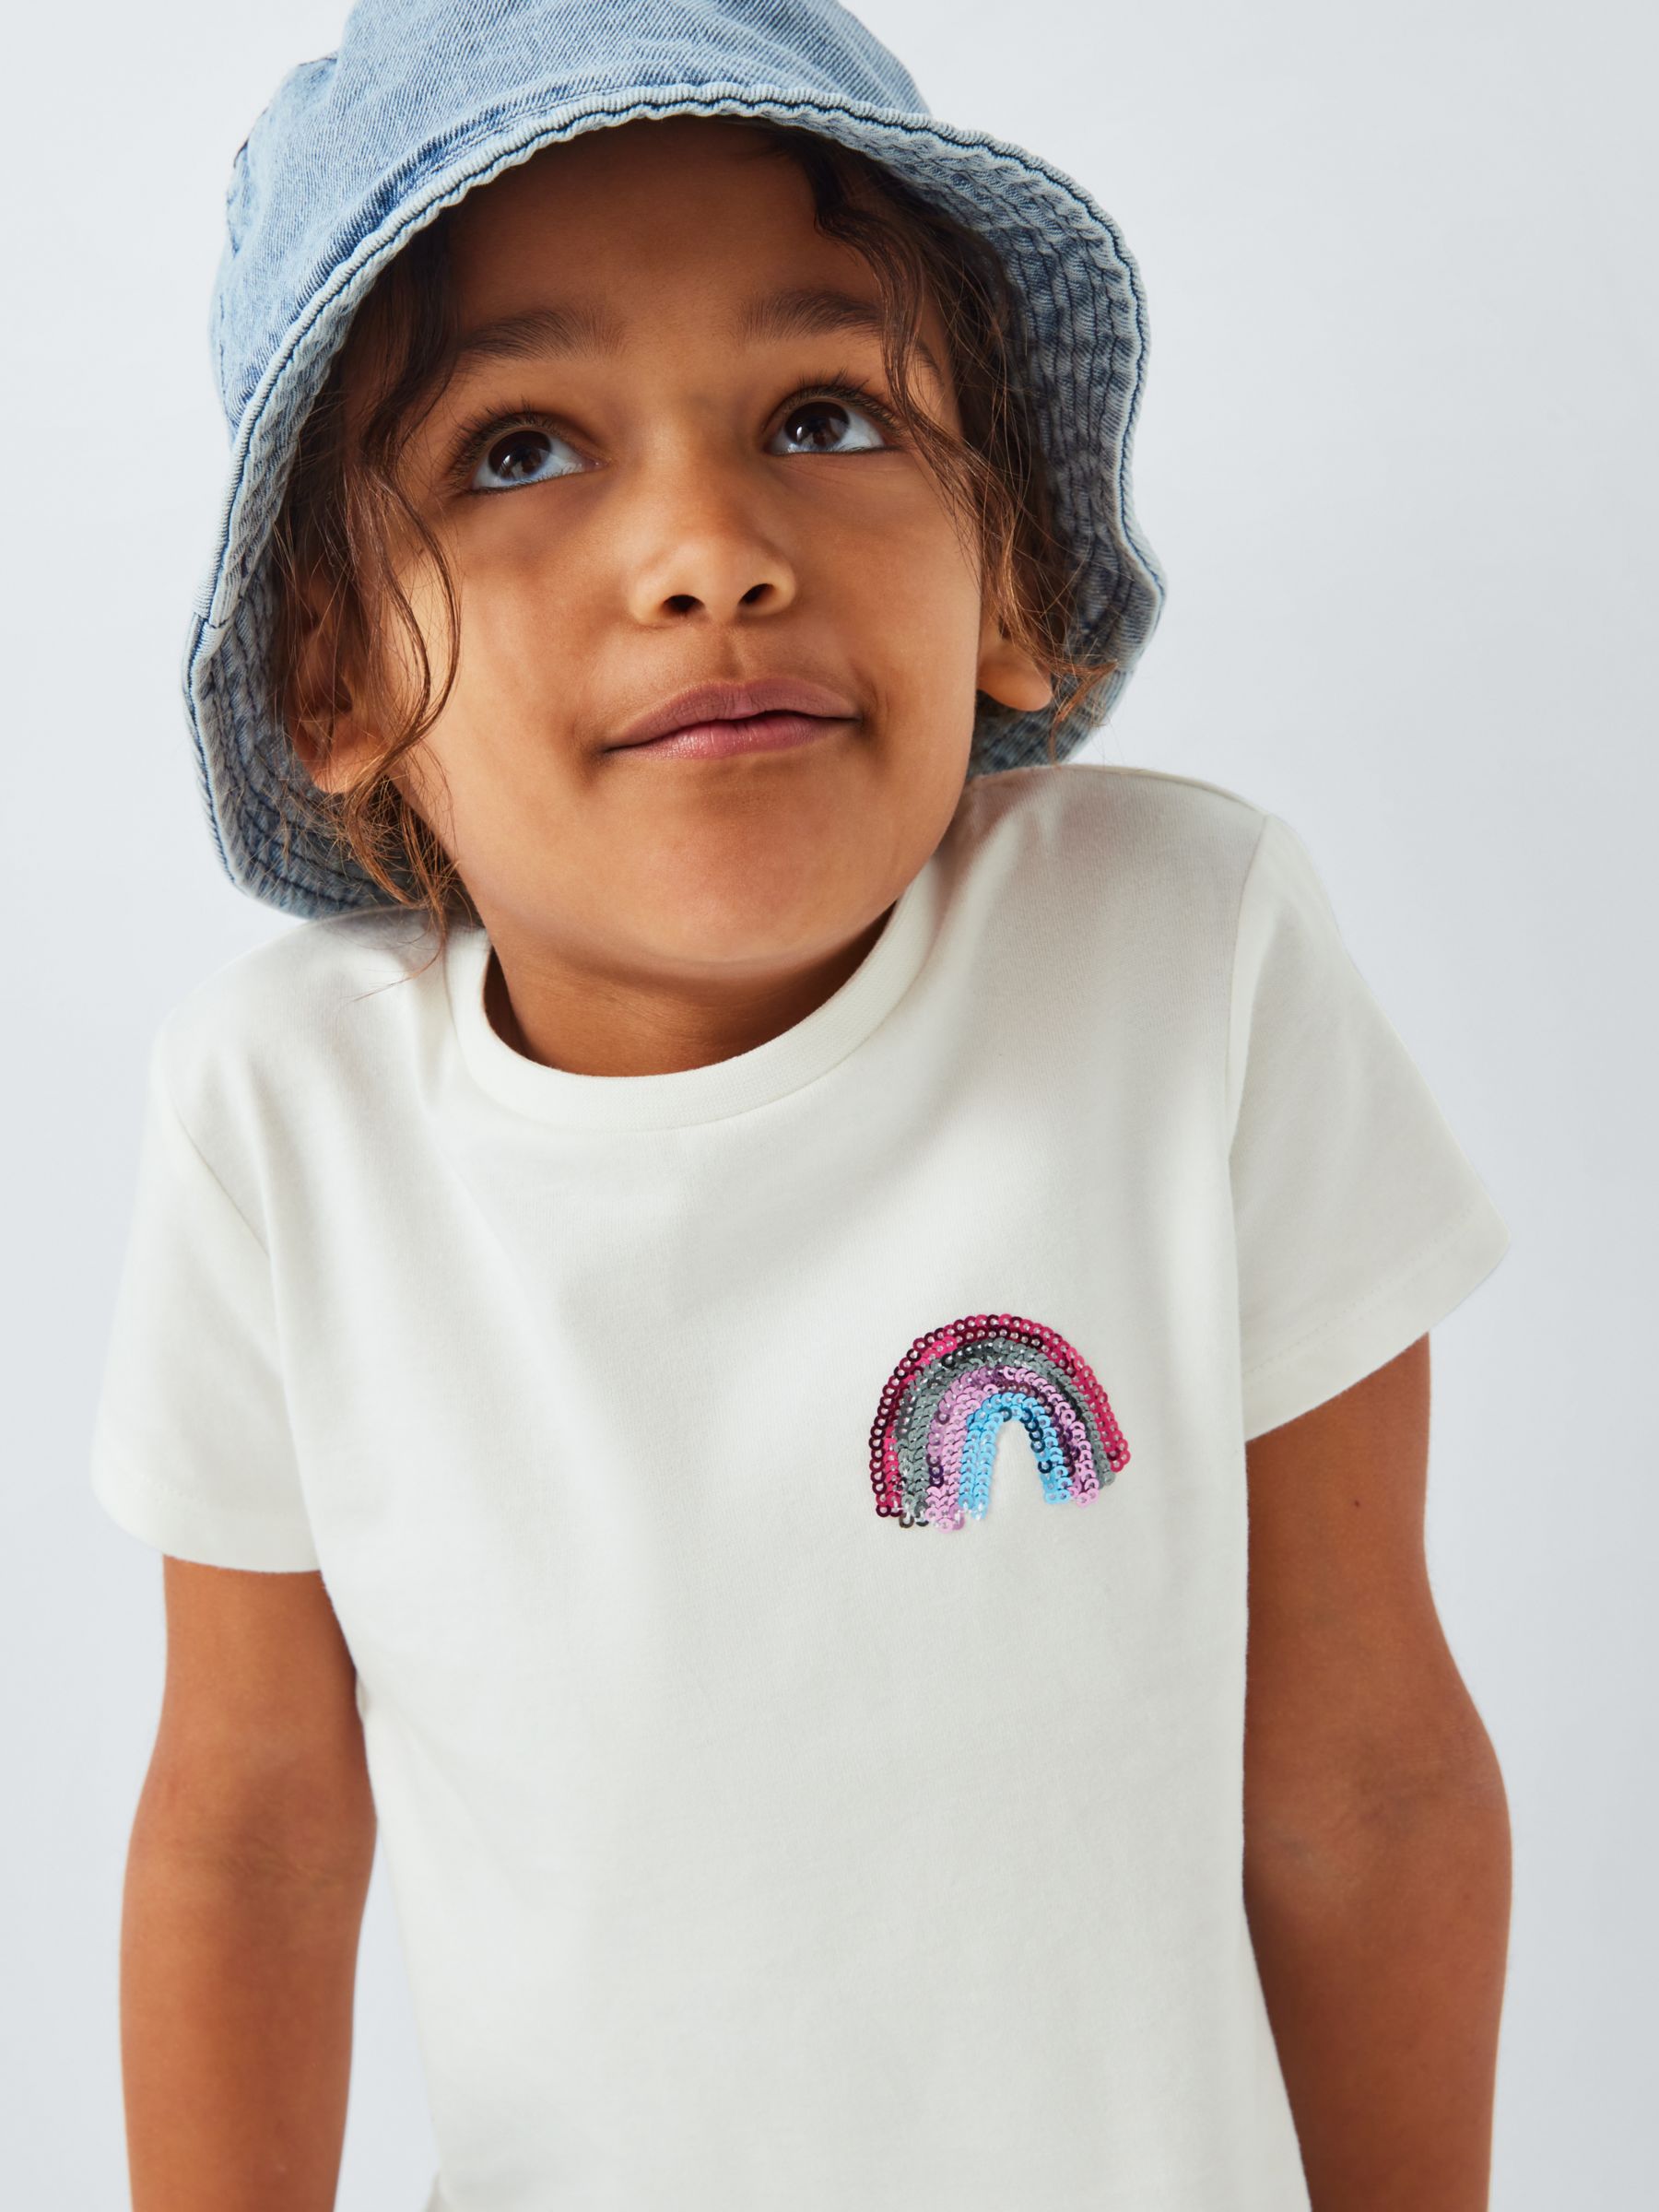 John Lewis Kids' Stripe/RainbowShort Sleeve T-Shirts, Pack of 3, White/Multi, 7 years